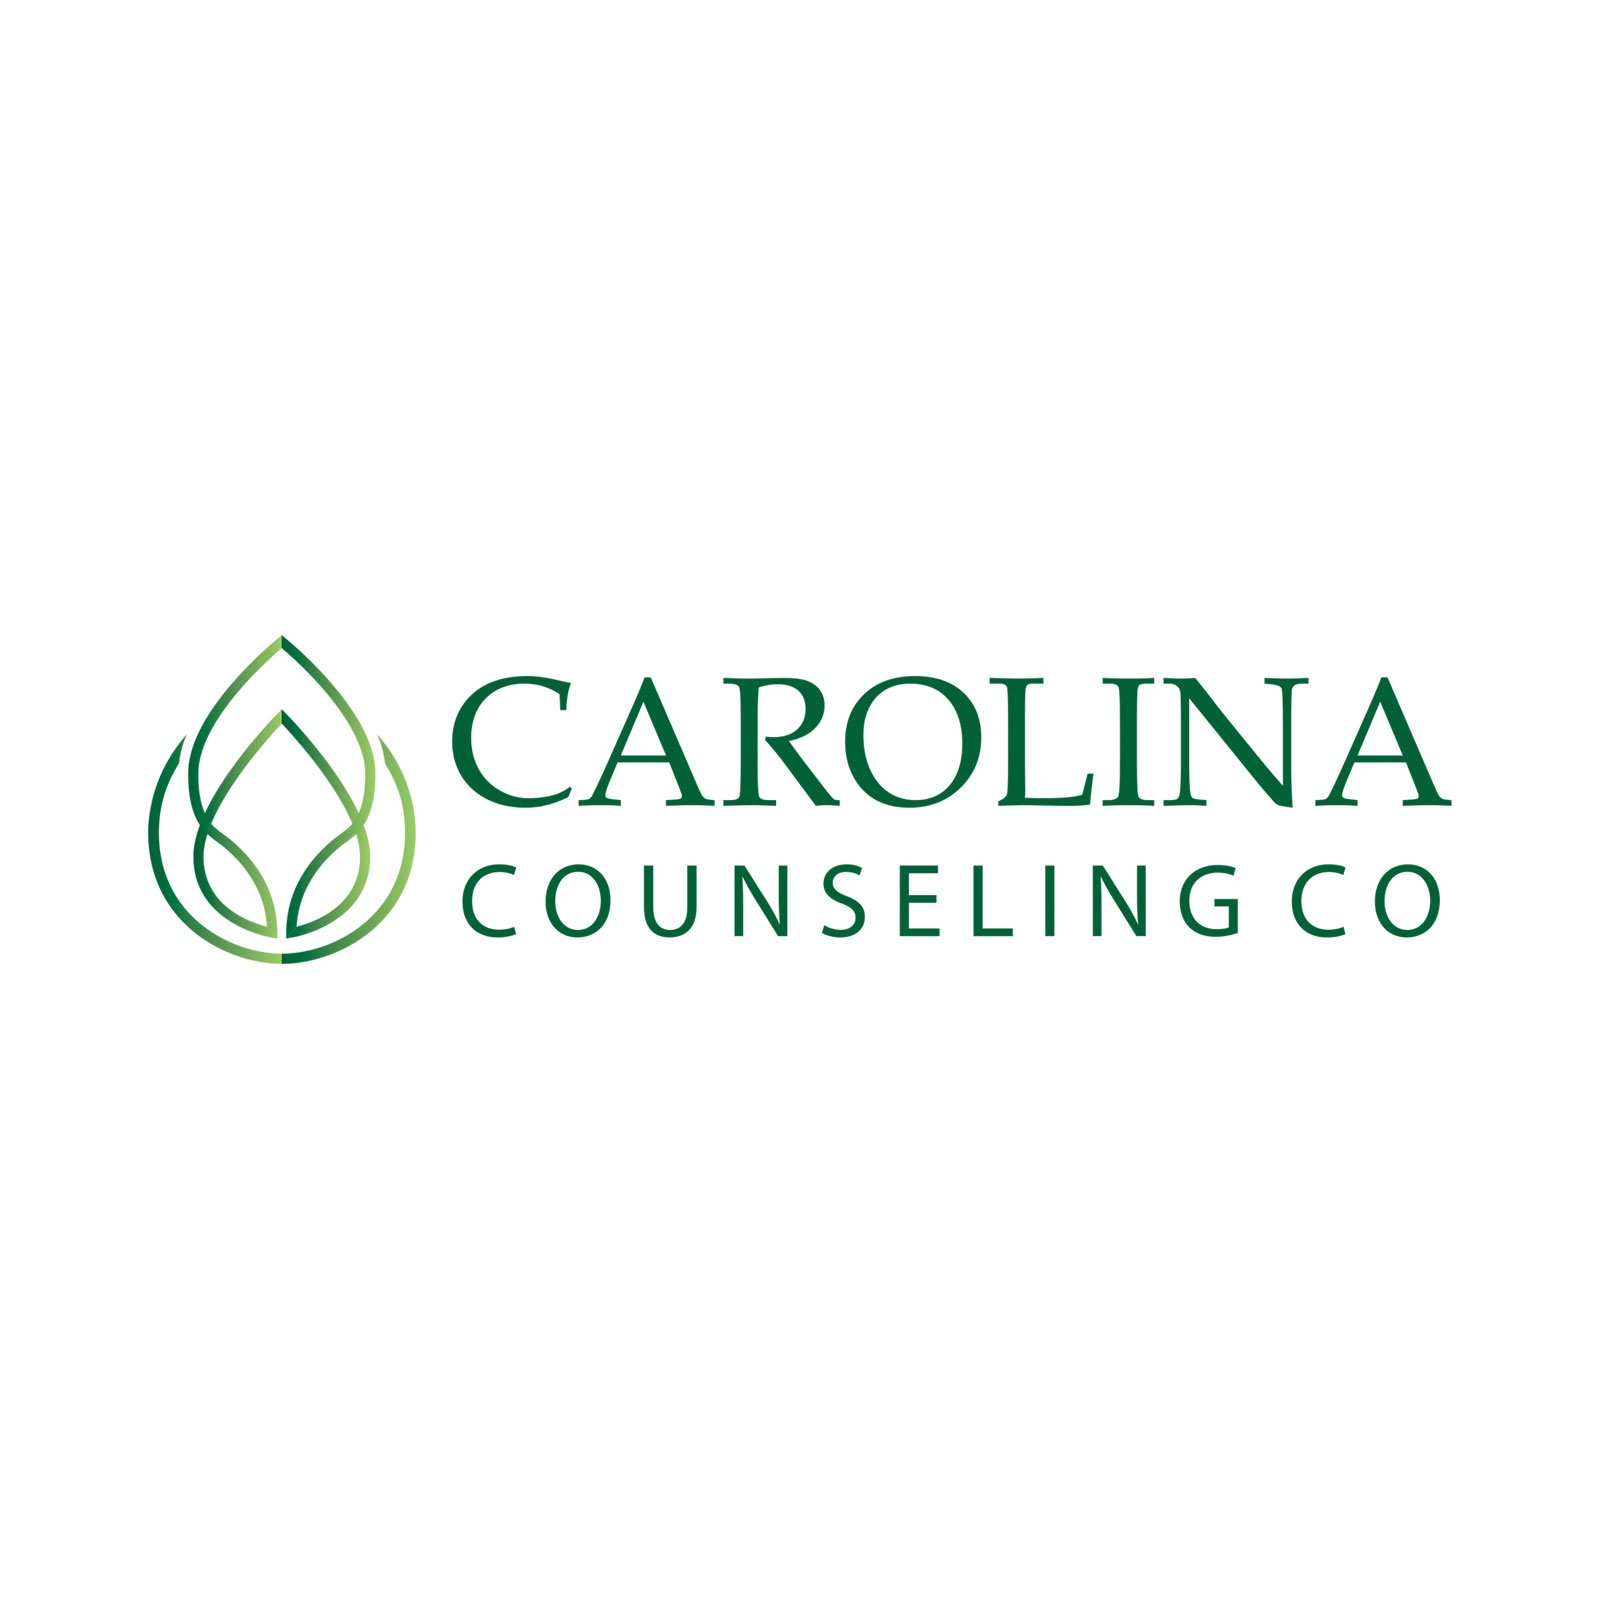 Carolina Counseling Co